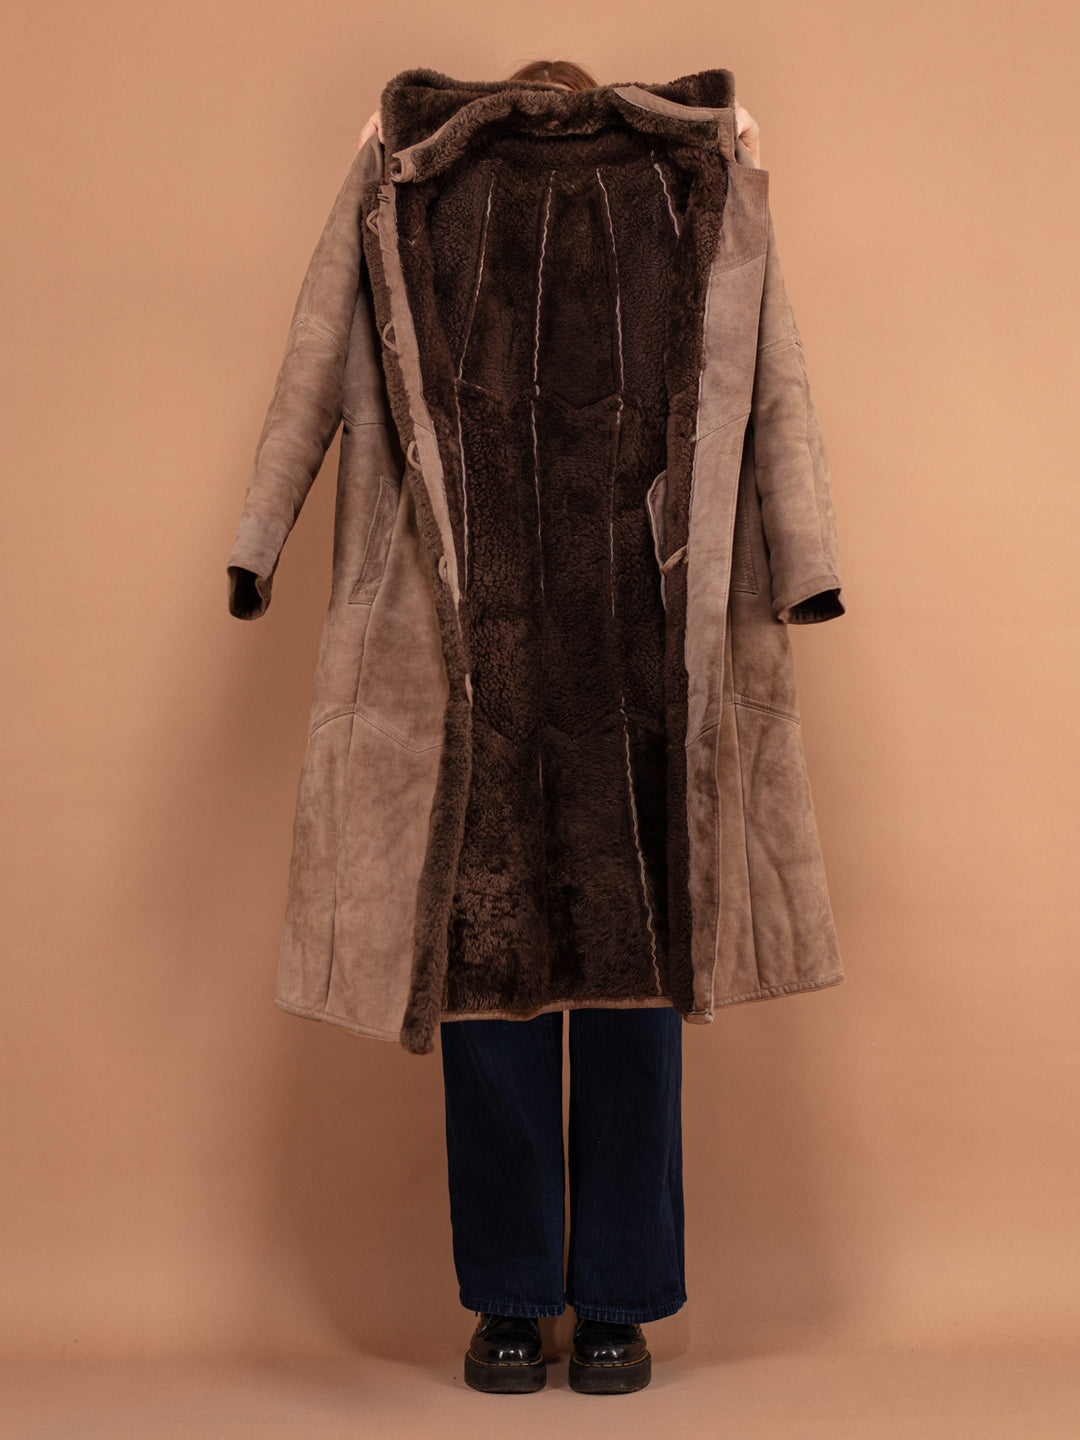 Hooded Sheepskin Coat 80s, Size Medium, Hooded Sheepskin, Beige Sheepskin Winter Coat, Sheepskin Long Coat, Boho Western Hippie Coat